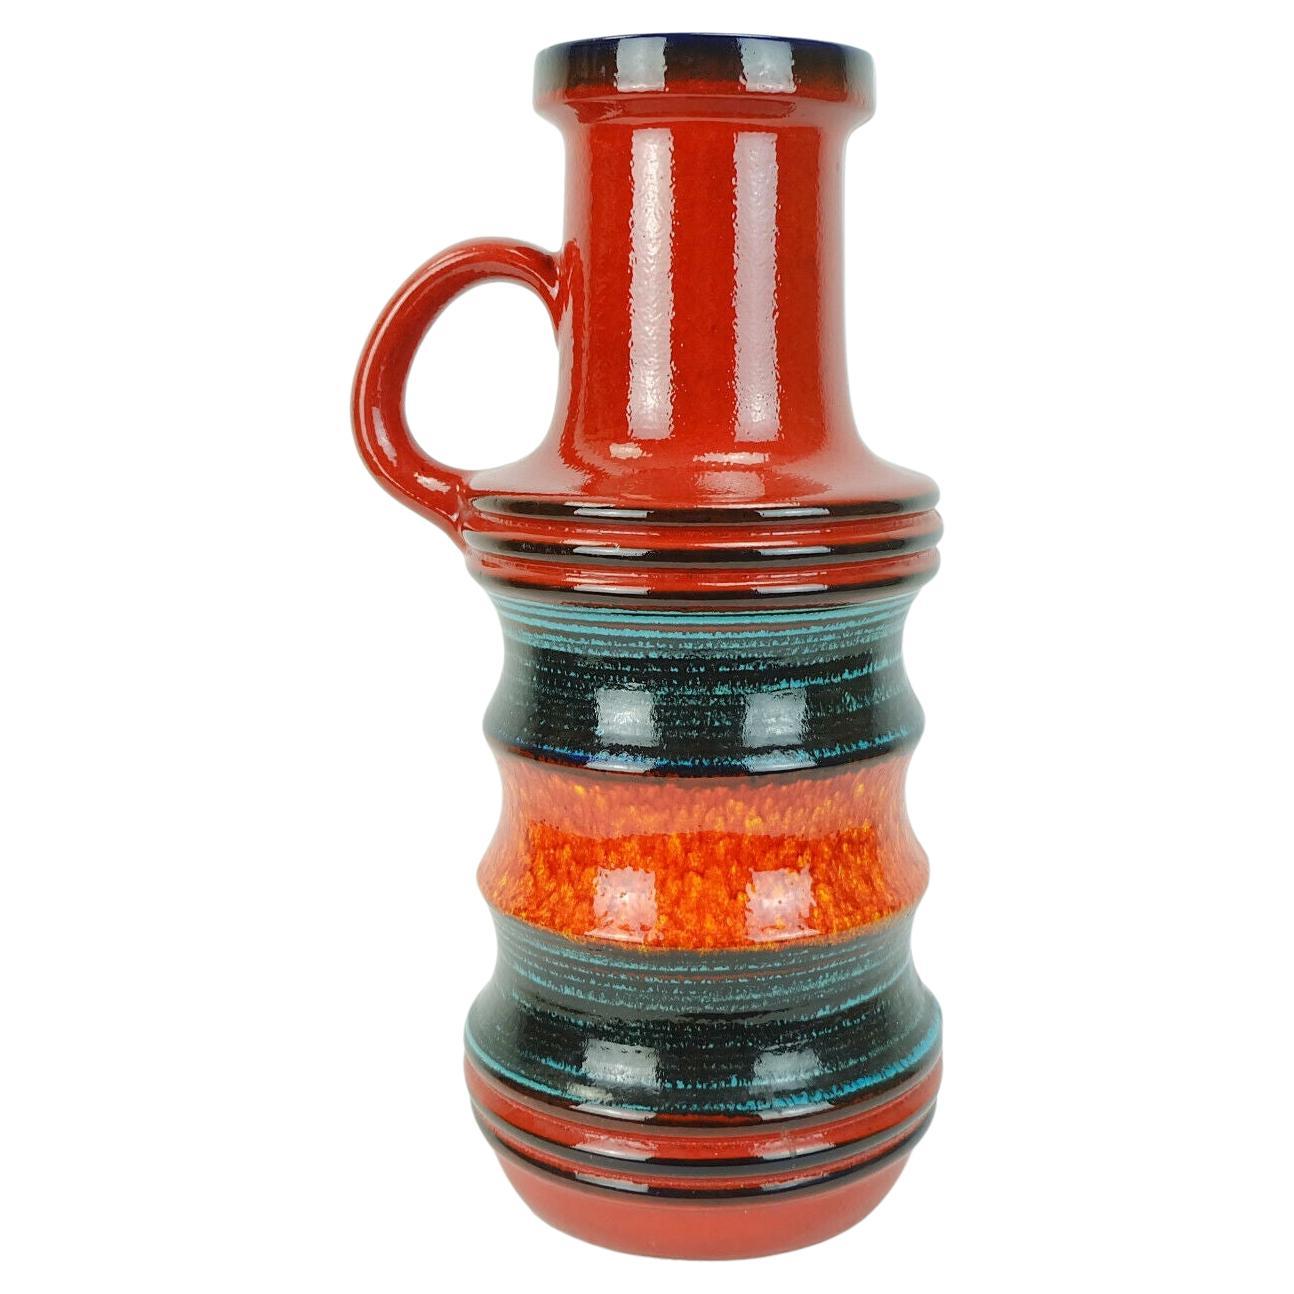 large scheurich ceramic floorvase model 427-47 stripe pattern red orange black